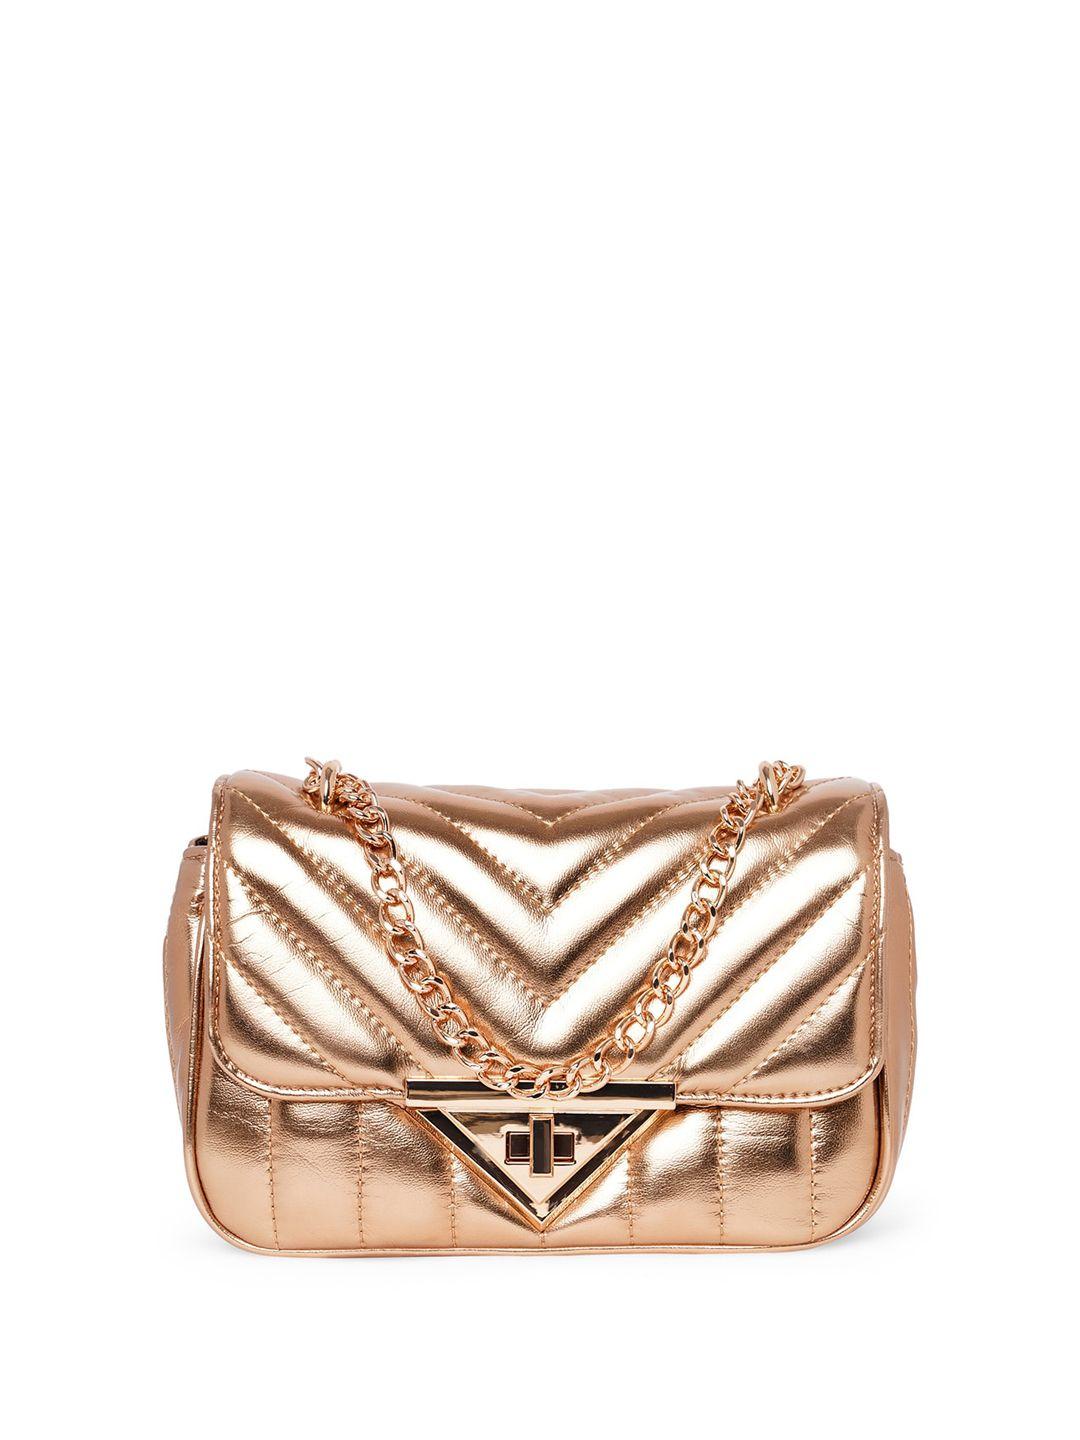 aldo gold-toned textured pu structured sling bag